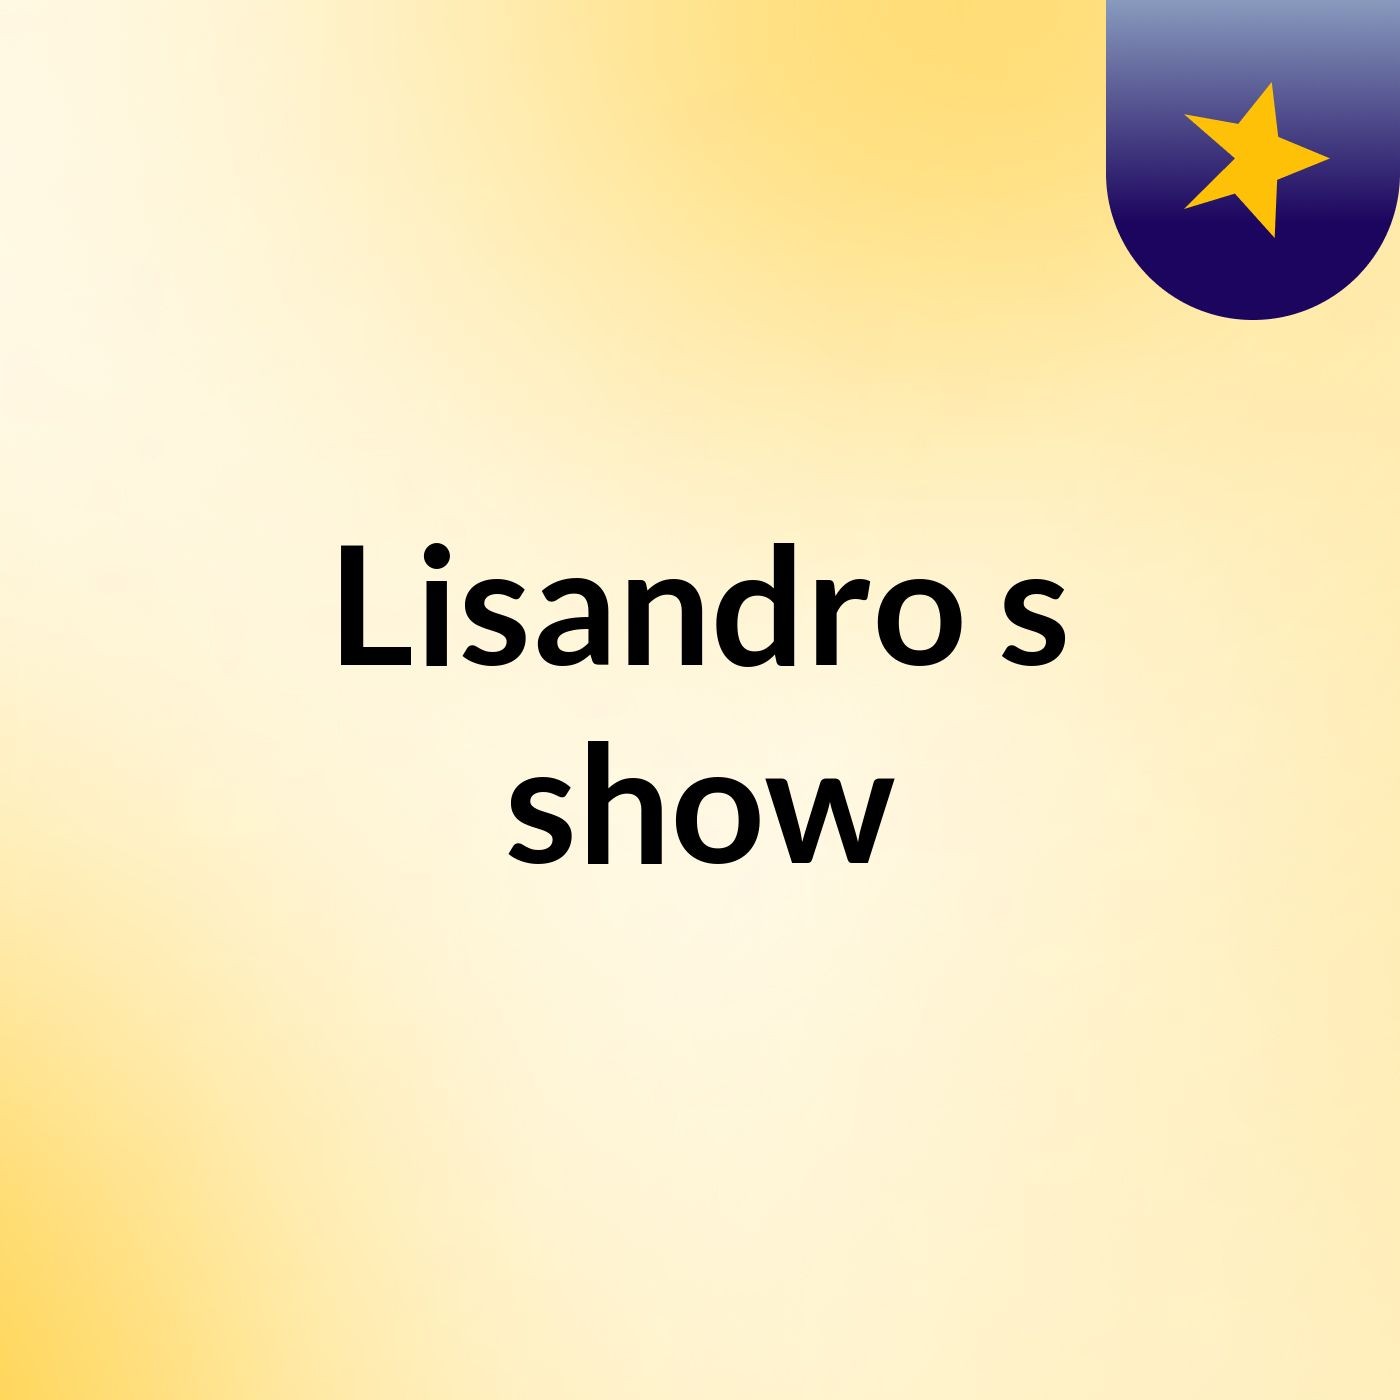 Lisandro's show